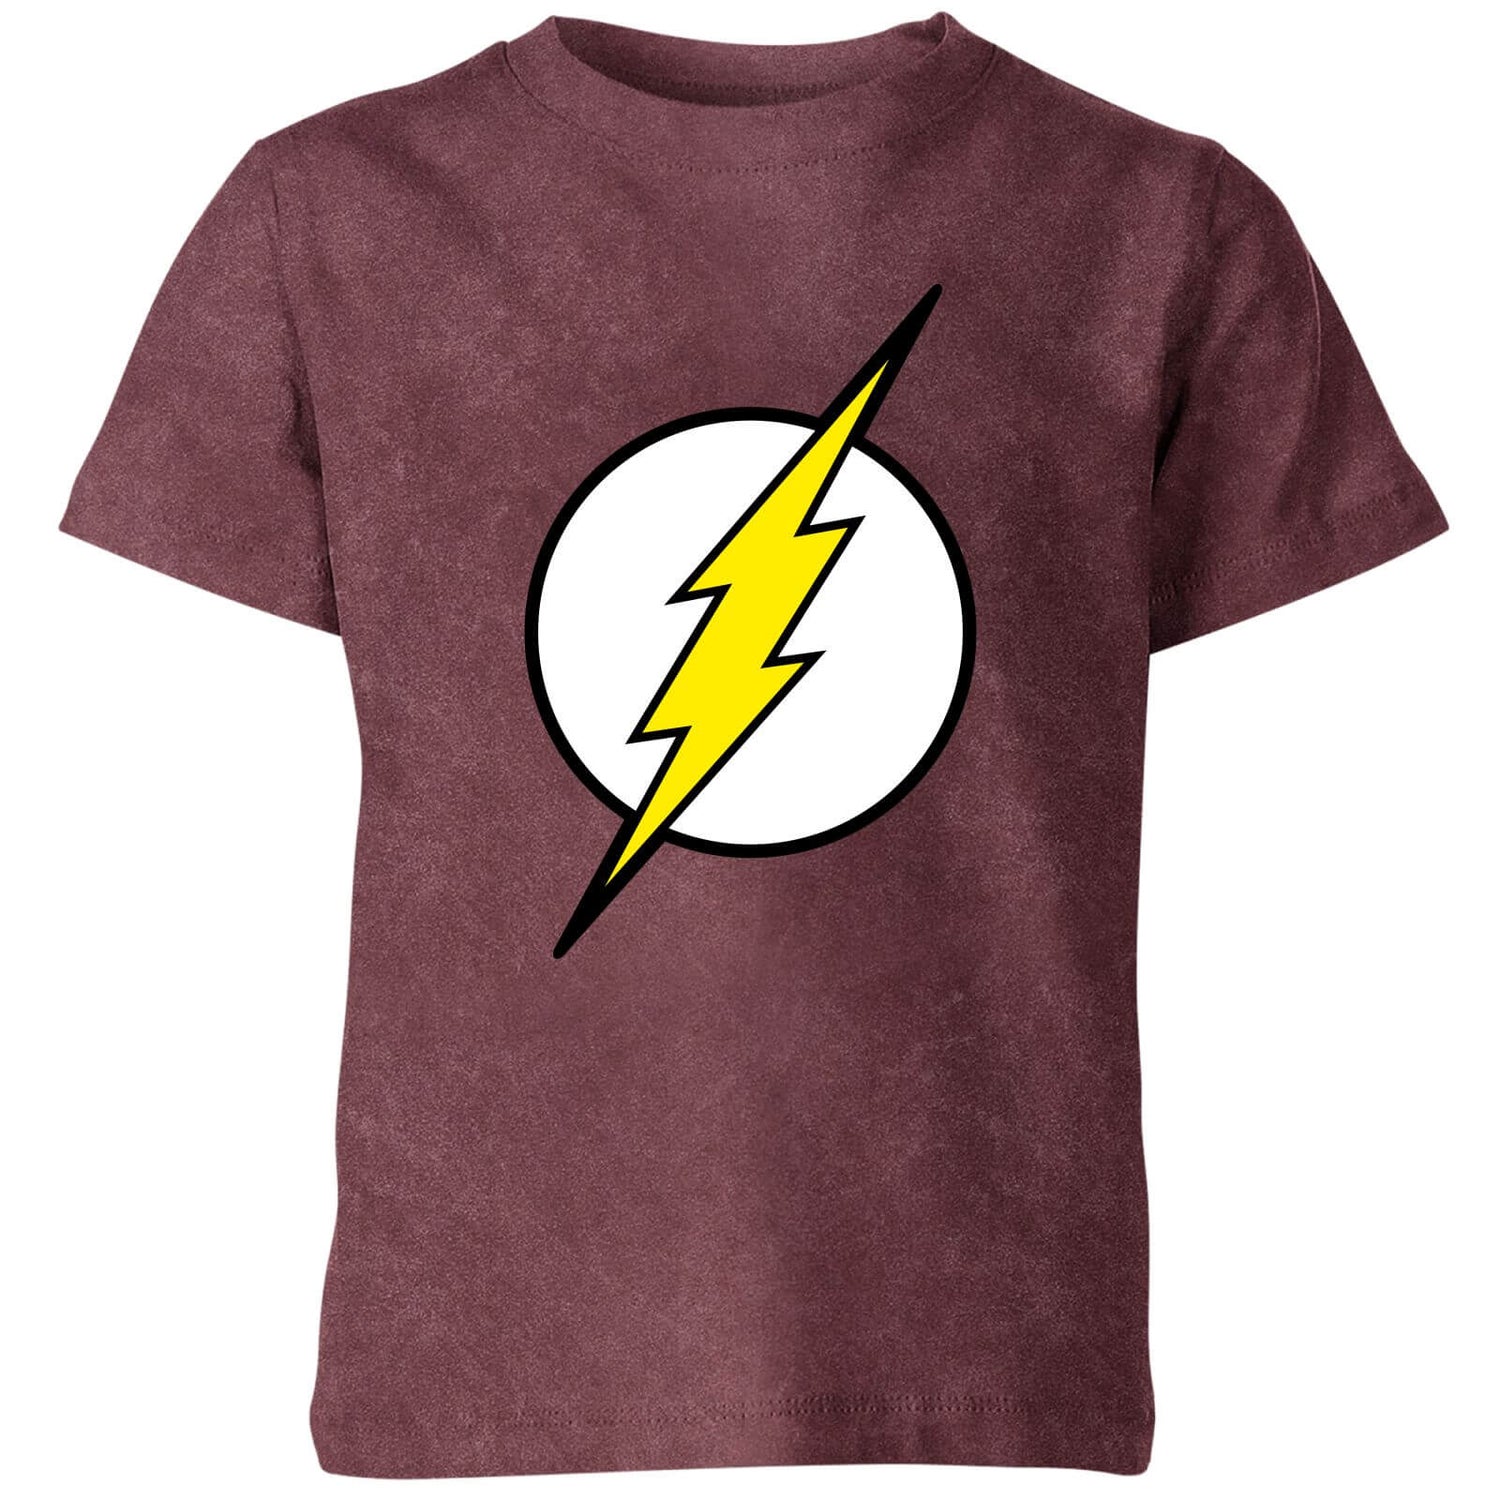 Justice League Flash Logo Kids' T-Shirt - Burgundy Acid Wash